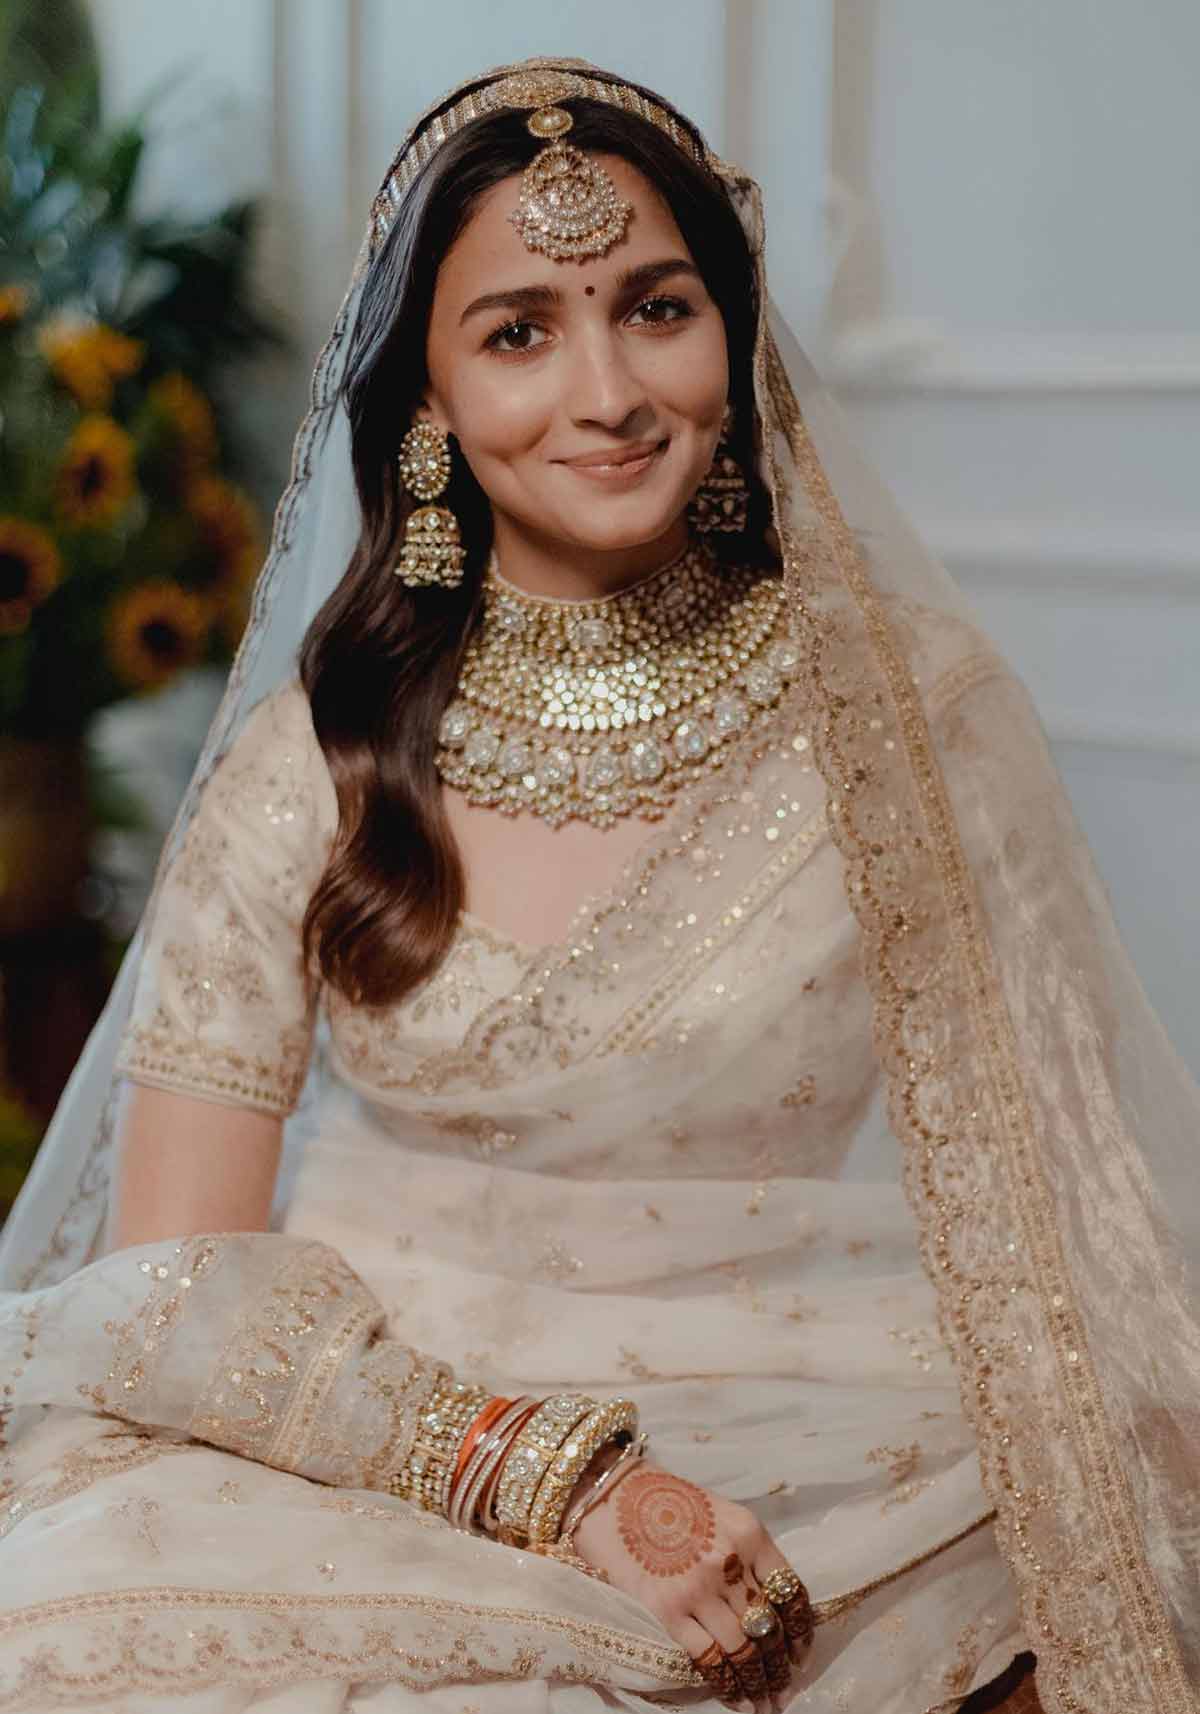 All The Pictures + Videos From Priyanka Chopra & Nick Jonas' Wedding! |  Indian wedding guest dress, Priyanka chopra wedding, Wedding outfit